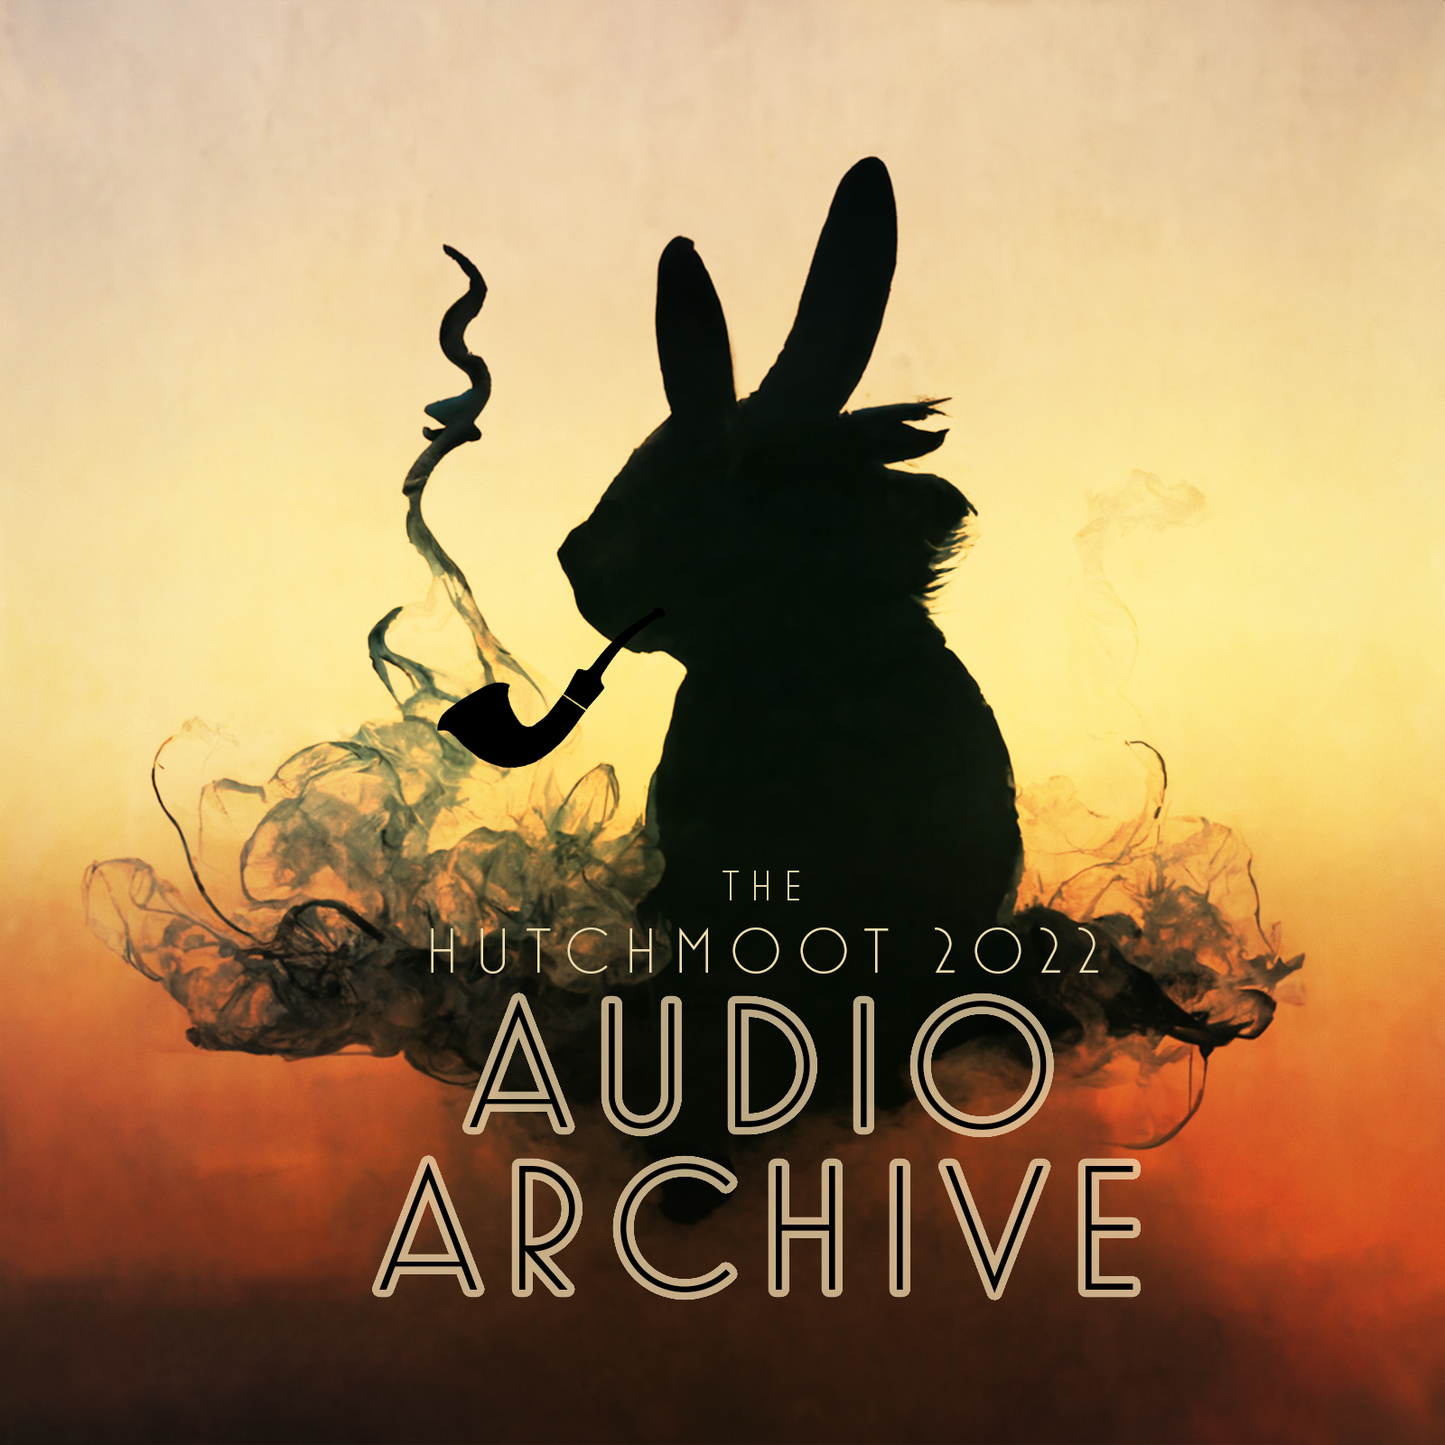 Hutchmoot 2022 Audio Archive